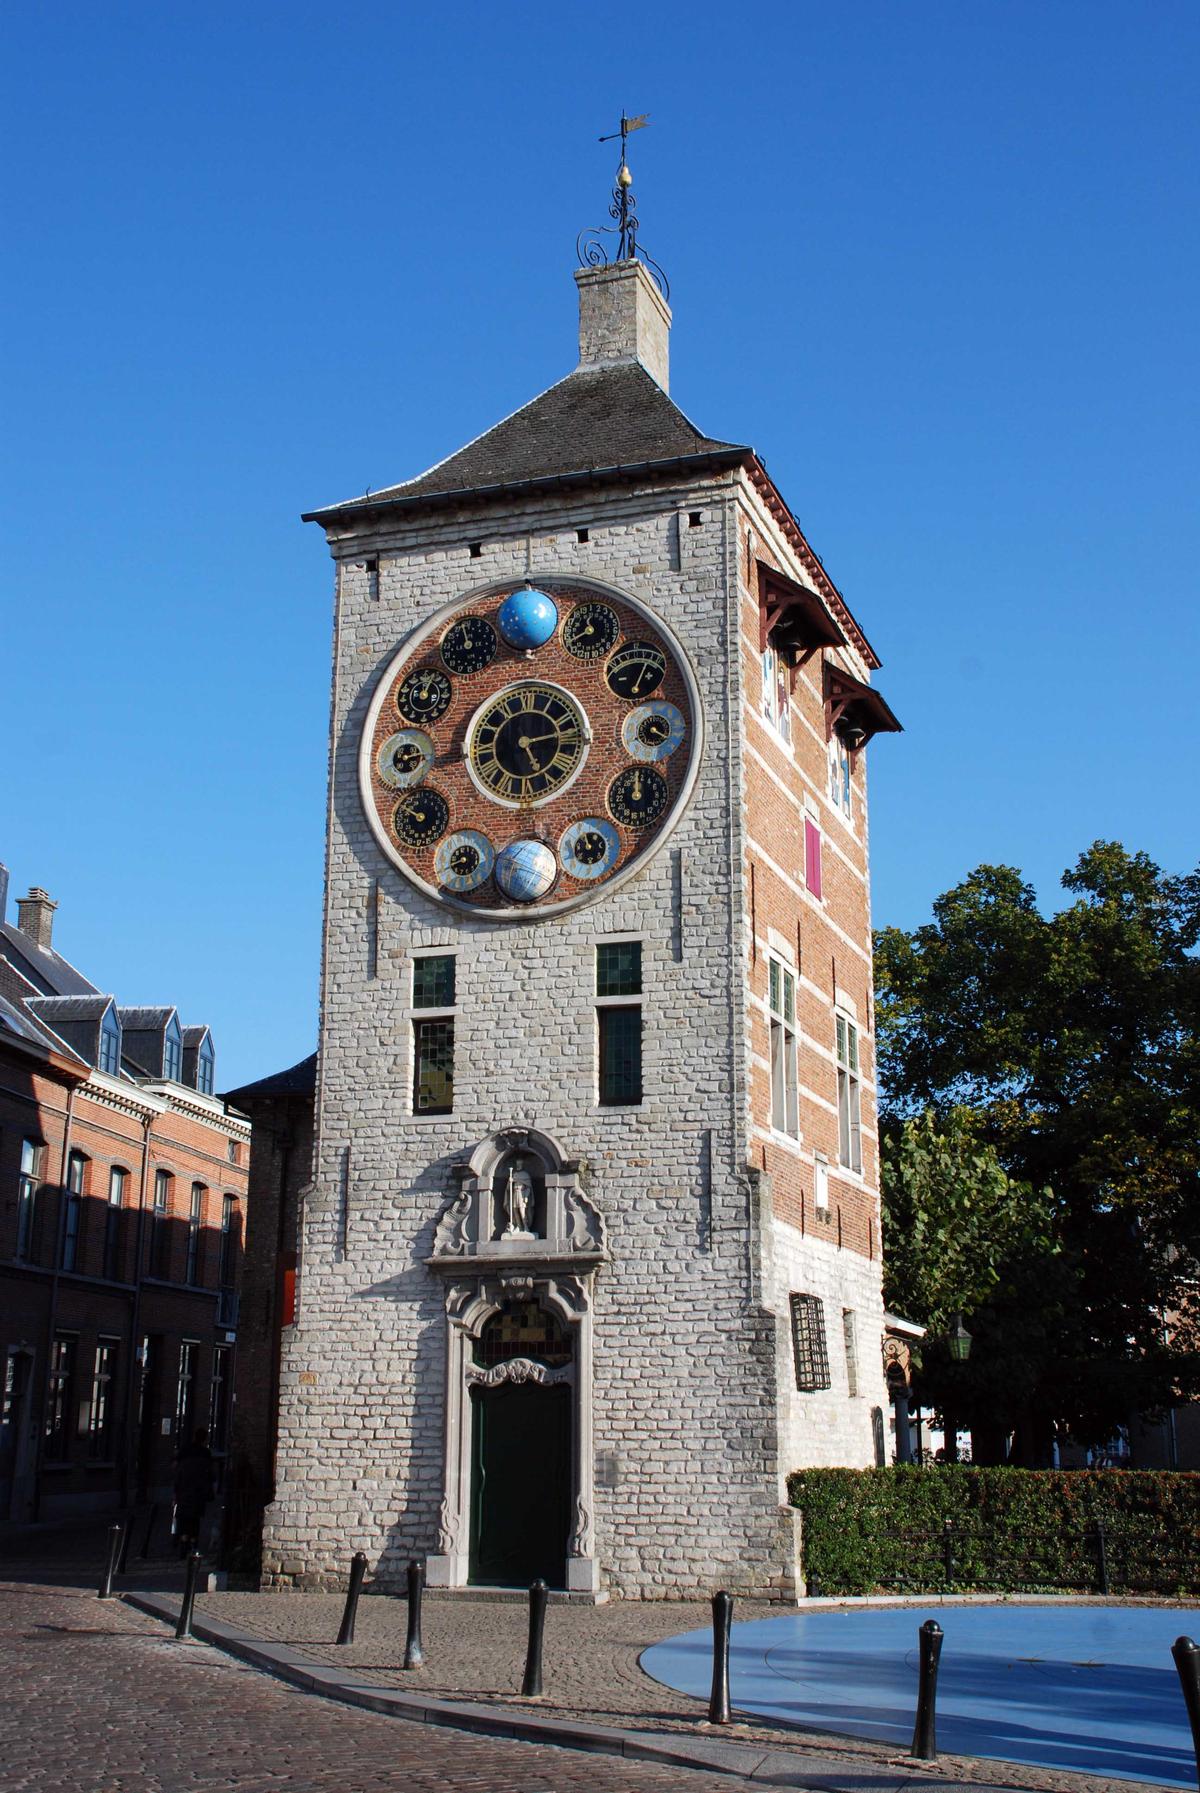 The famous Zimmer clock tower in the city of Lier, Belgium. (Daniel Leppens/Shutterstock)